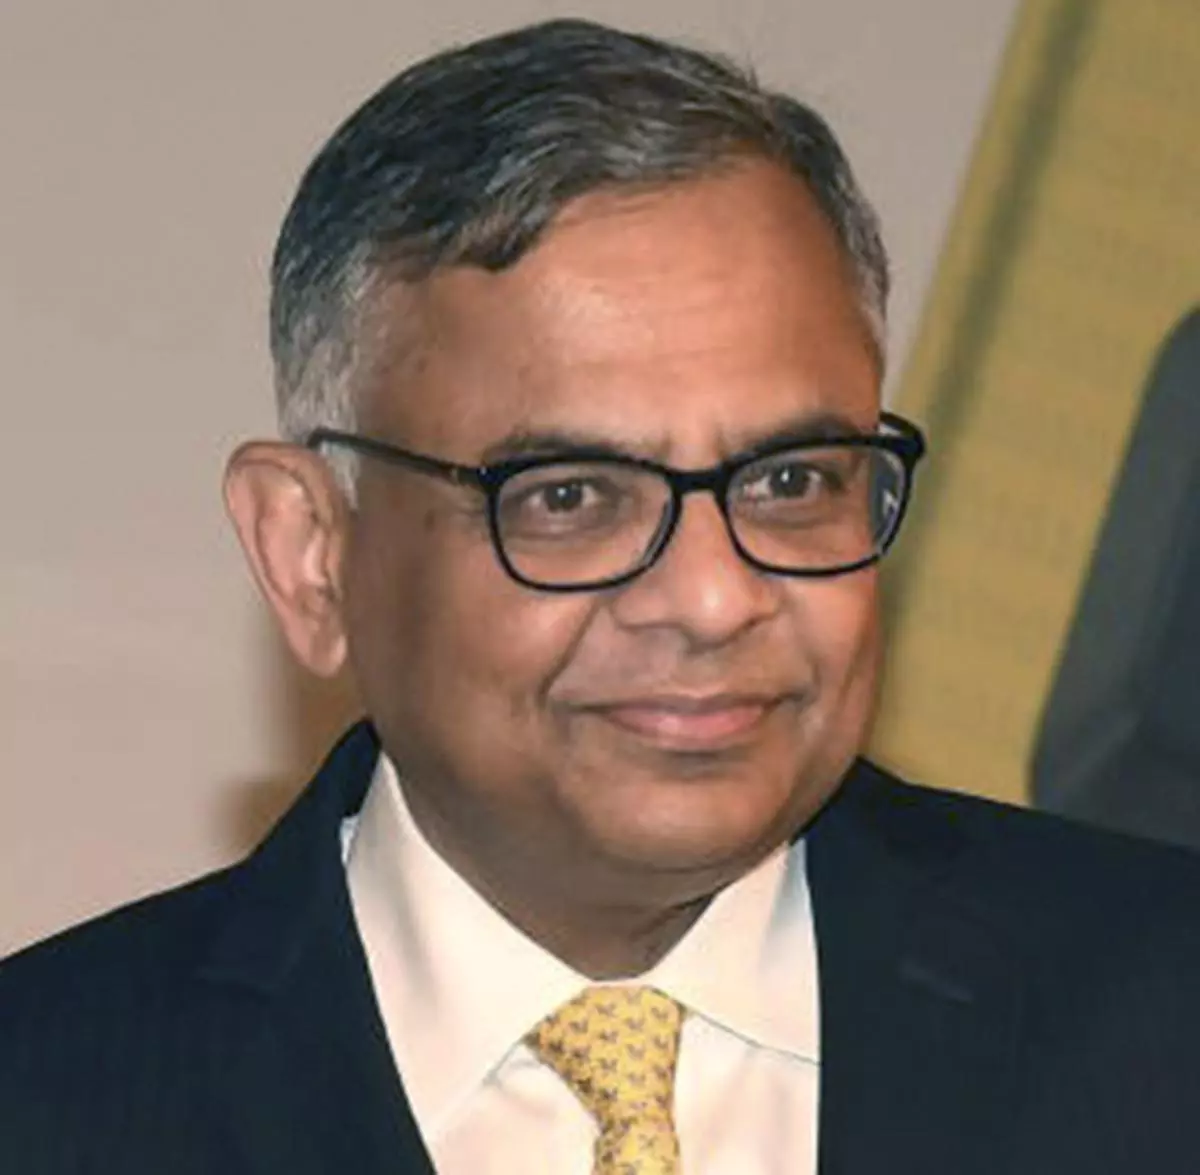 Tata Sons Chairman N Chandrasekaran